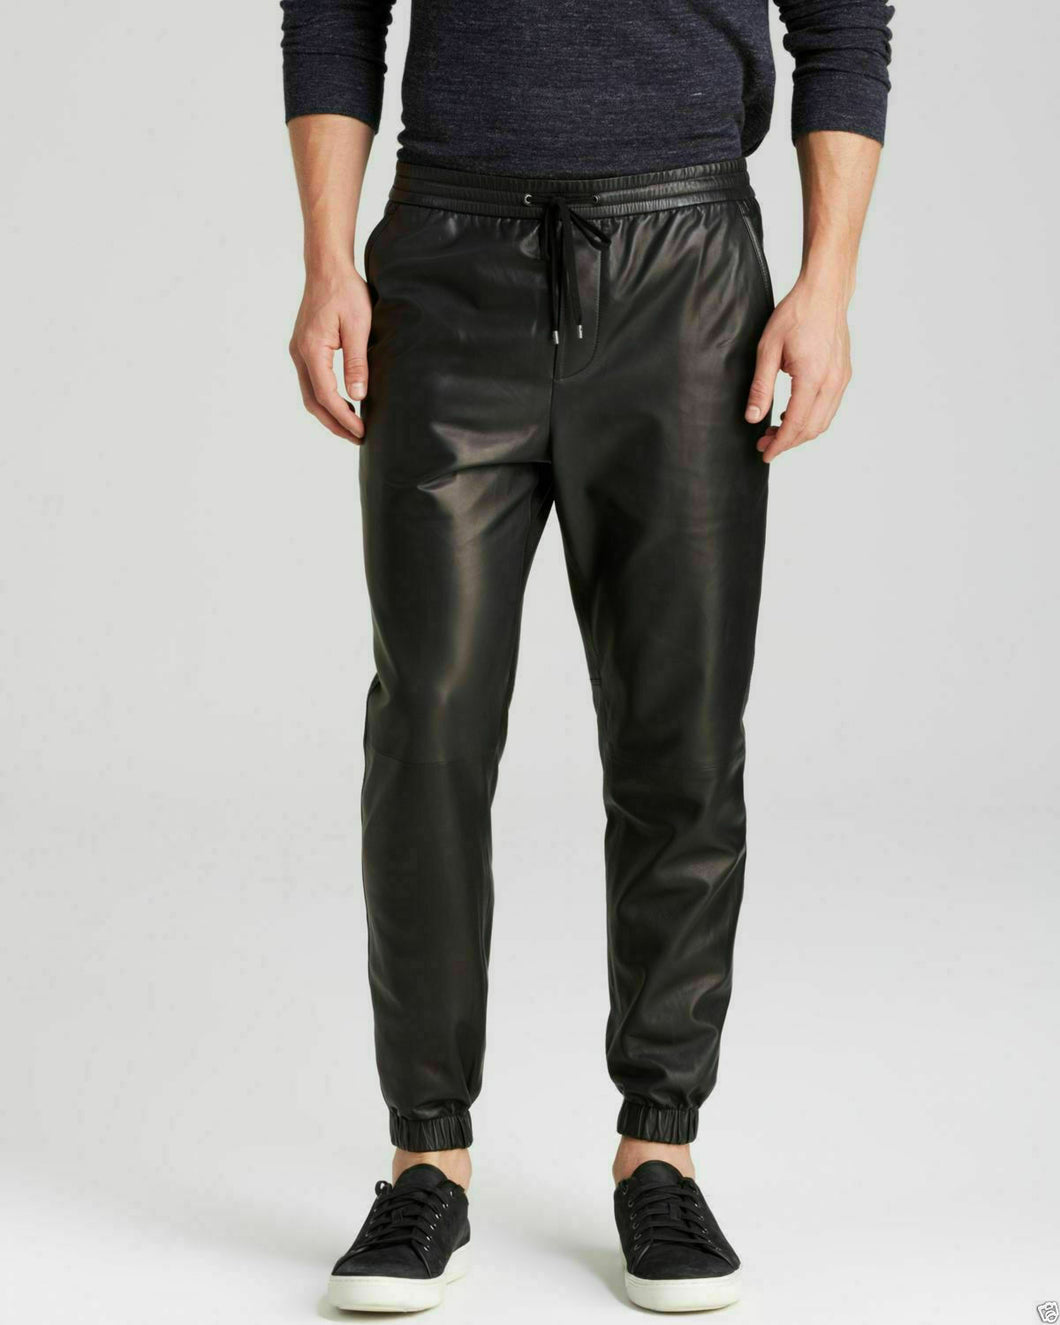 Men's Black Genuine Leather Track pants